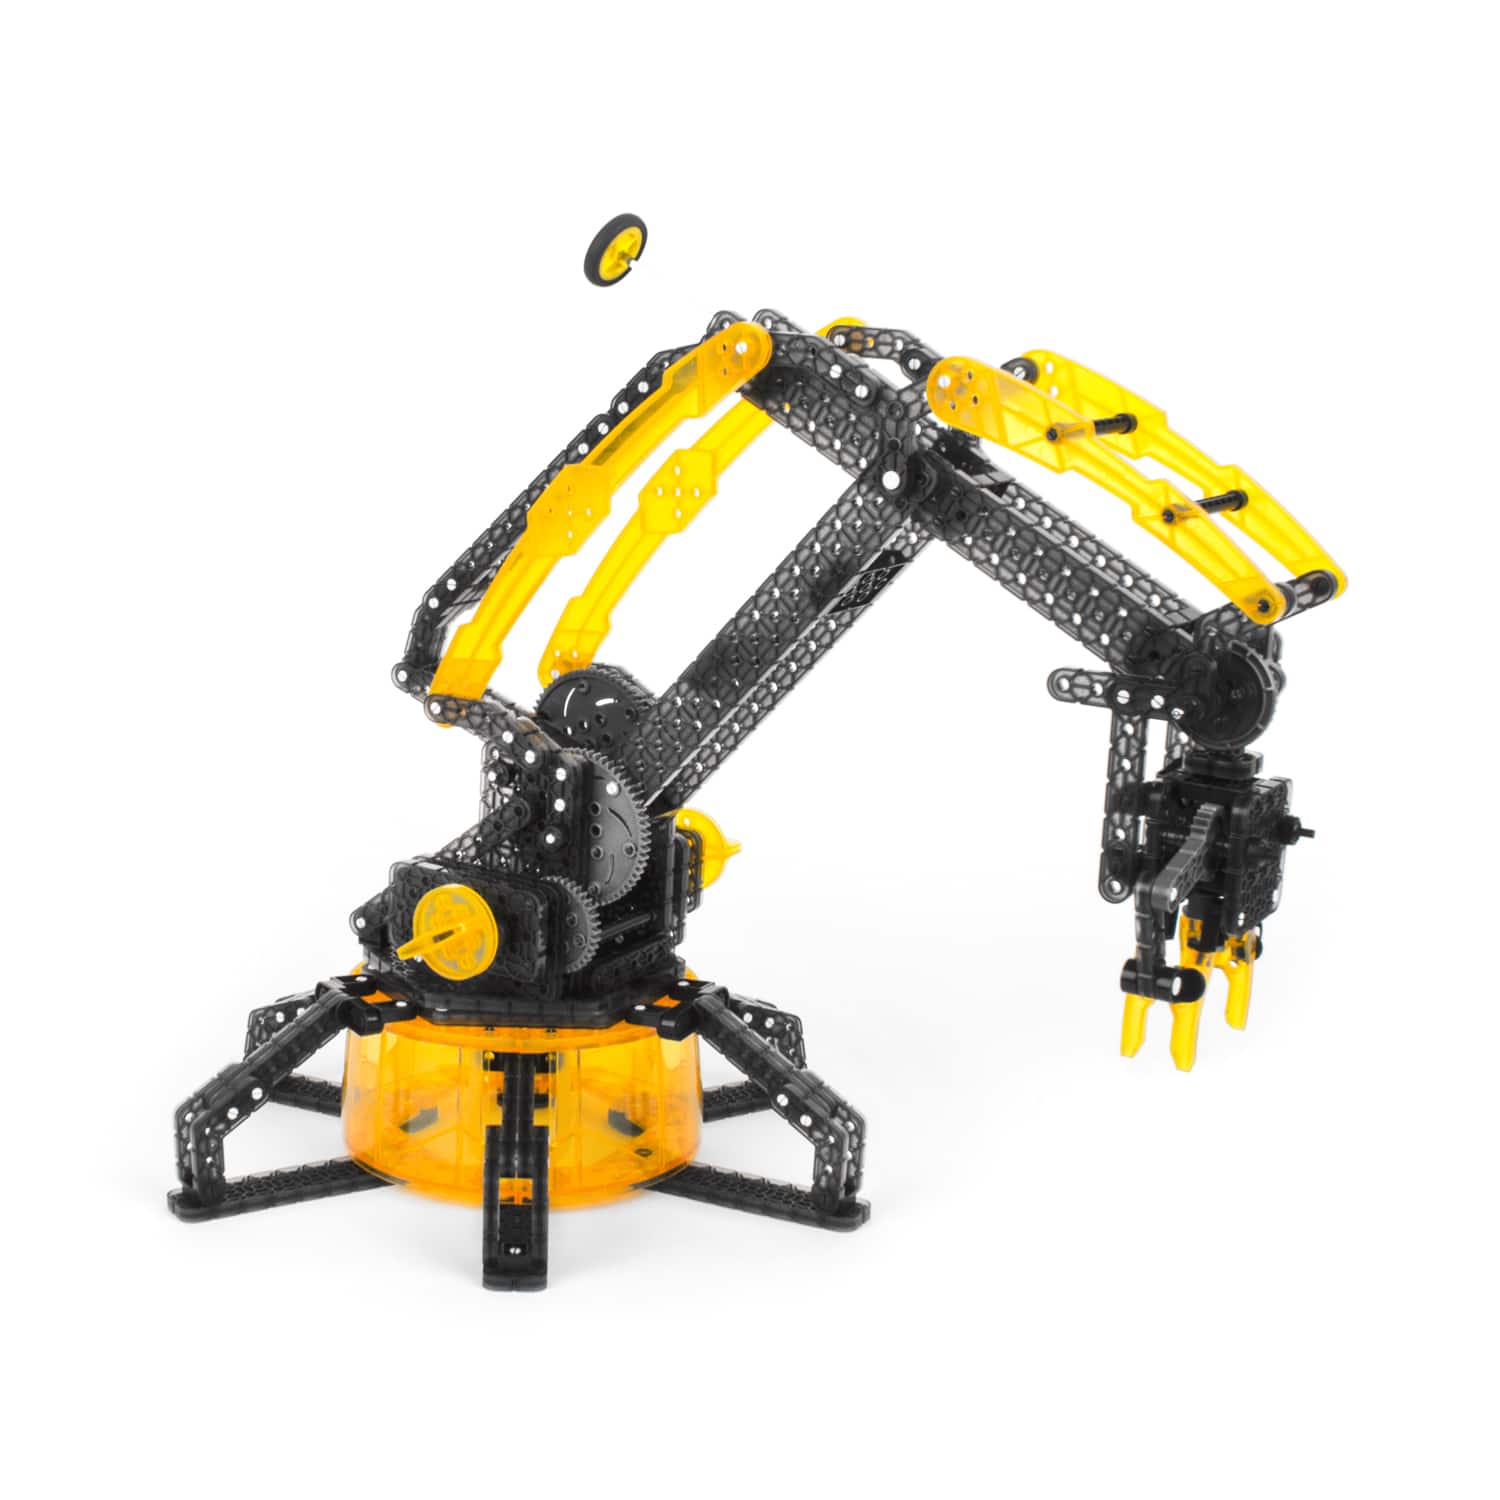 Hexbug Vex Motorized Robotic Arm Construction Set 844780 DISTRESSED 